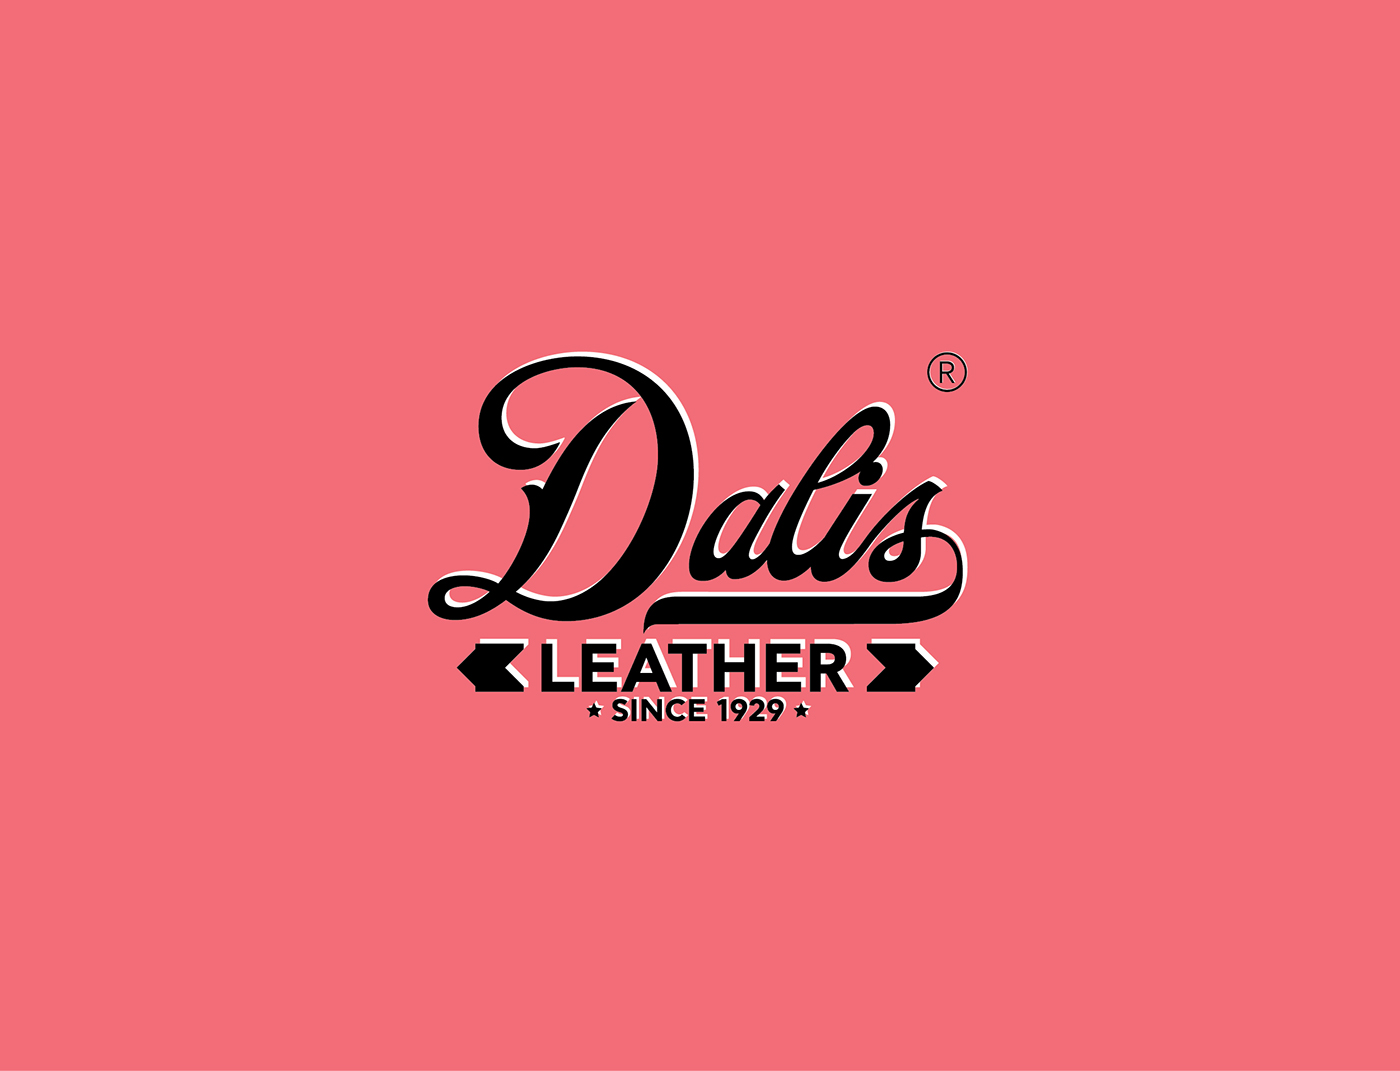 Dalis Leather | Branding - Corporate Identity on Behance